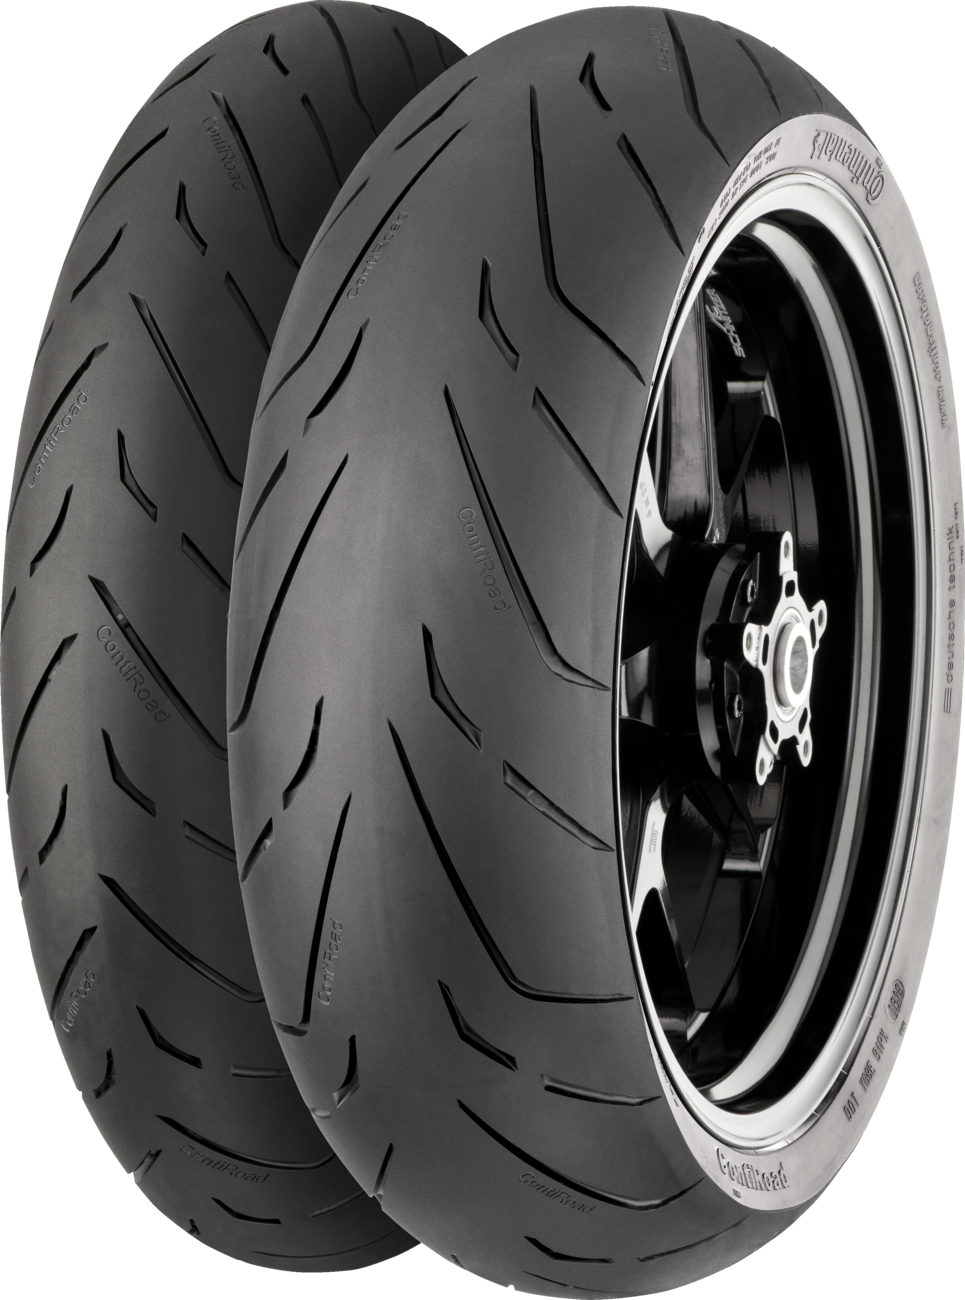 Tire - ContiRoad - Rear - 140/70-17 - 66S